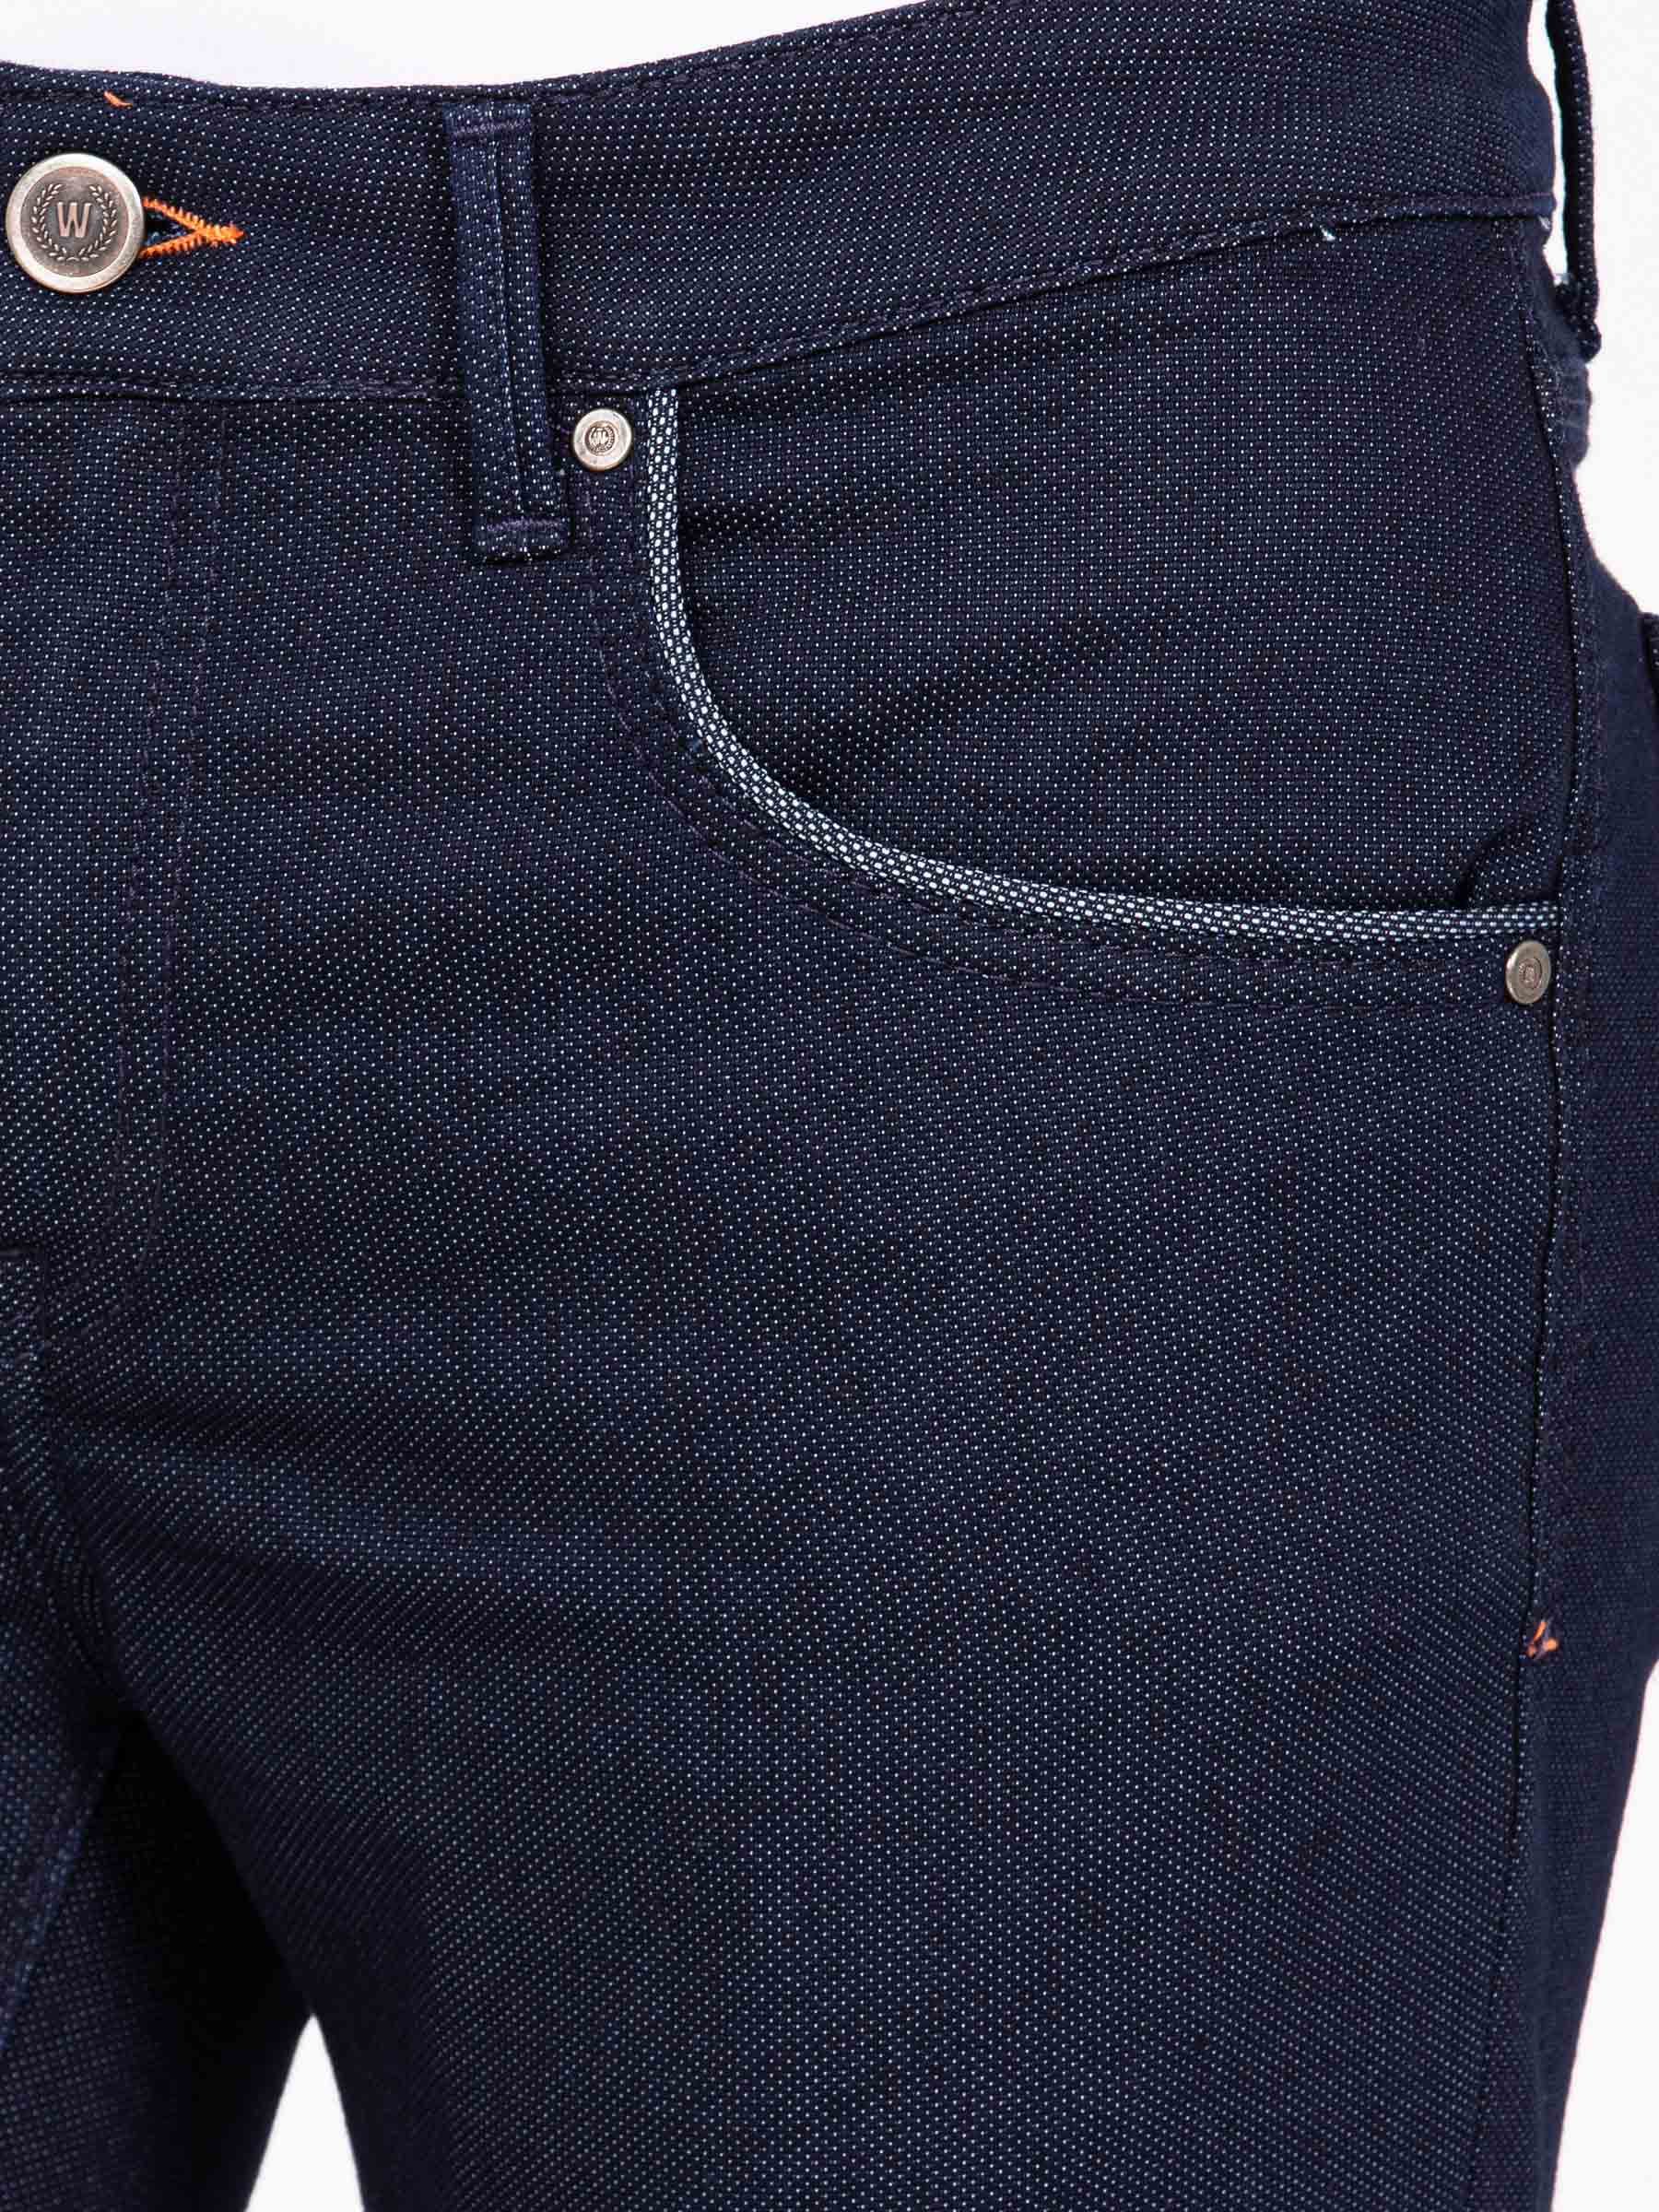 Swindon Stretch Slim Fit Dark Navy Jeans